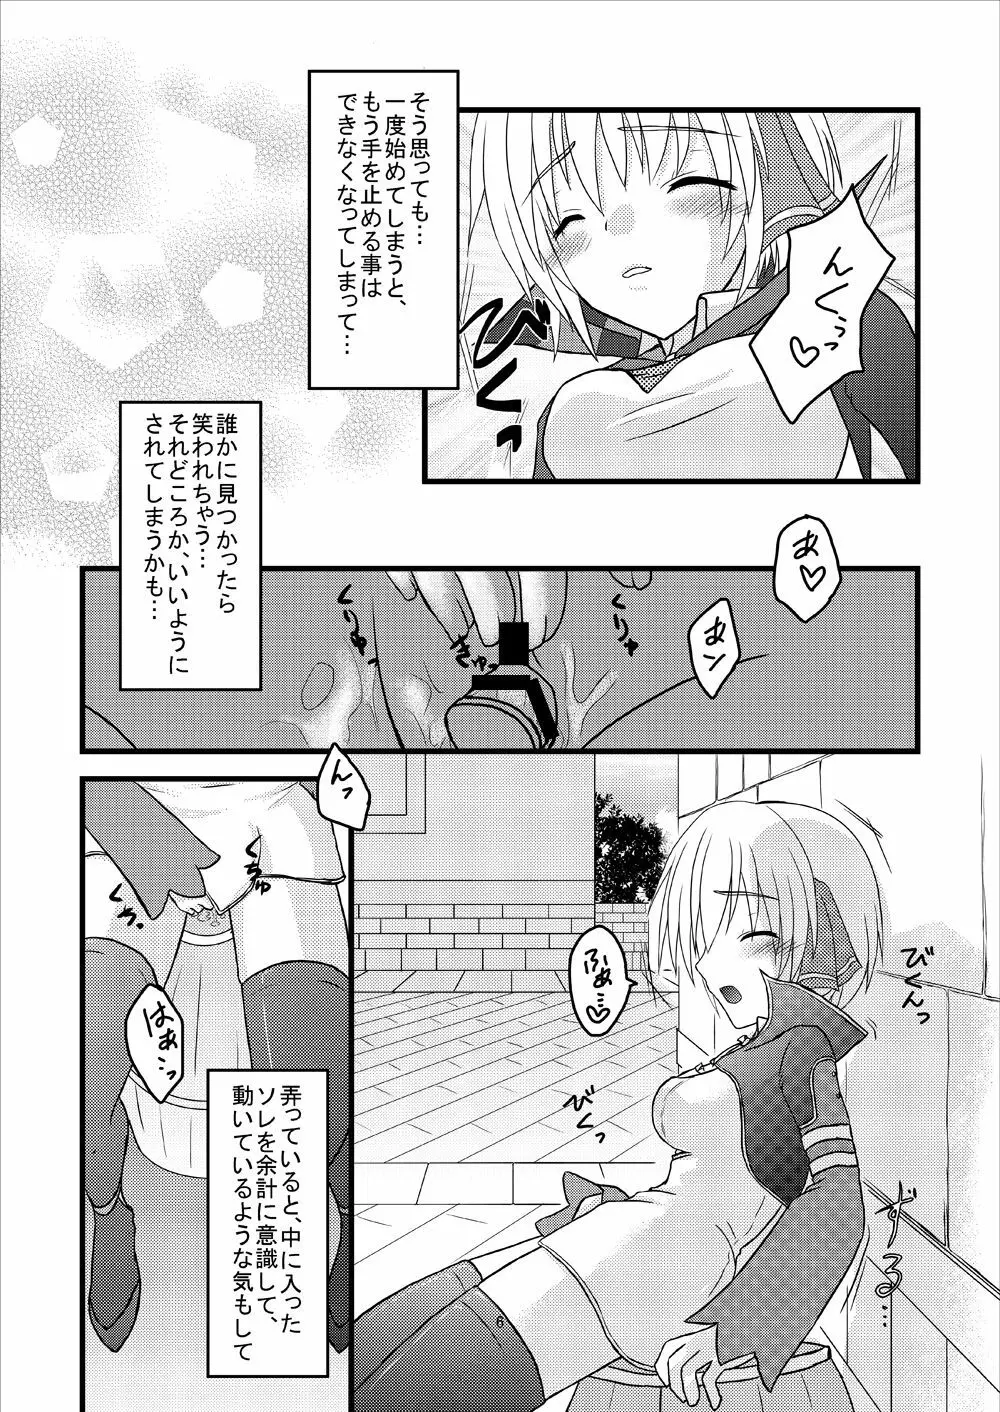 FEZ本まとめ - page6